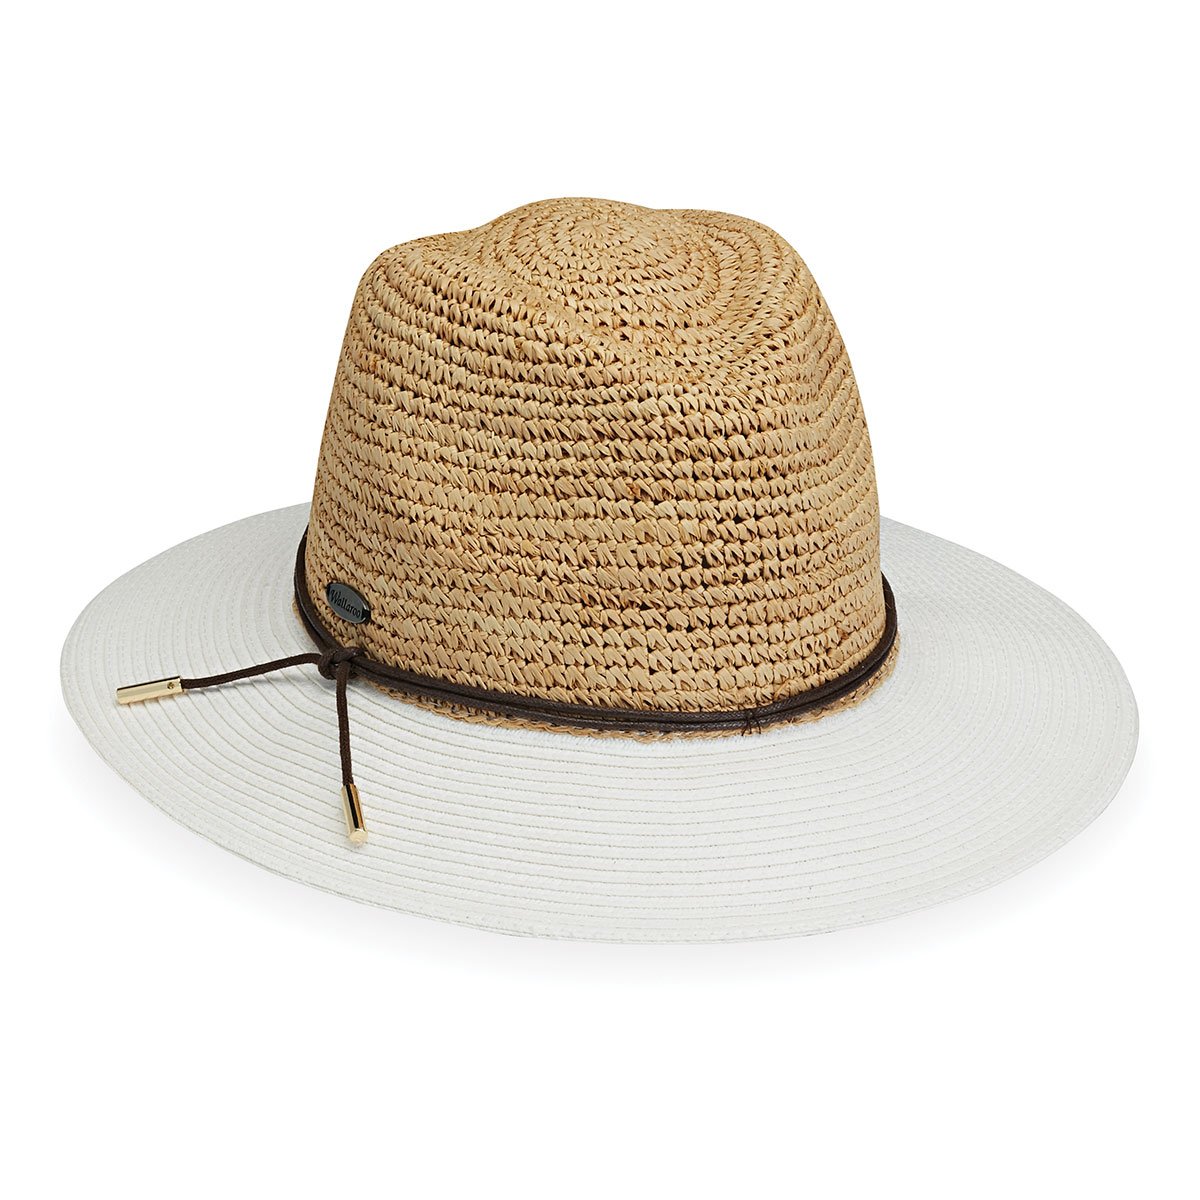 Featuring Women's Fedora Style Laguna  Straw Summer Sun Hat in Natural White from Wallaroo